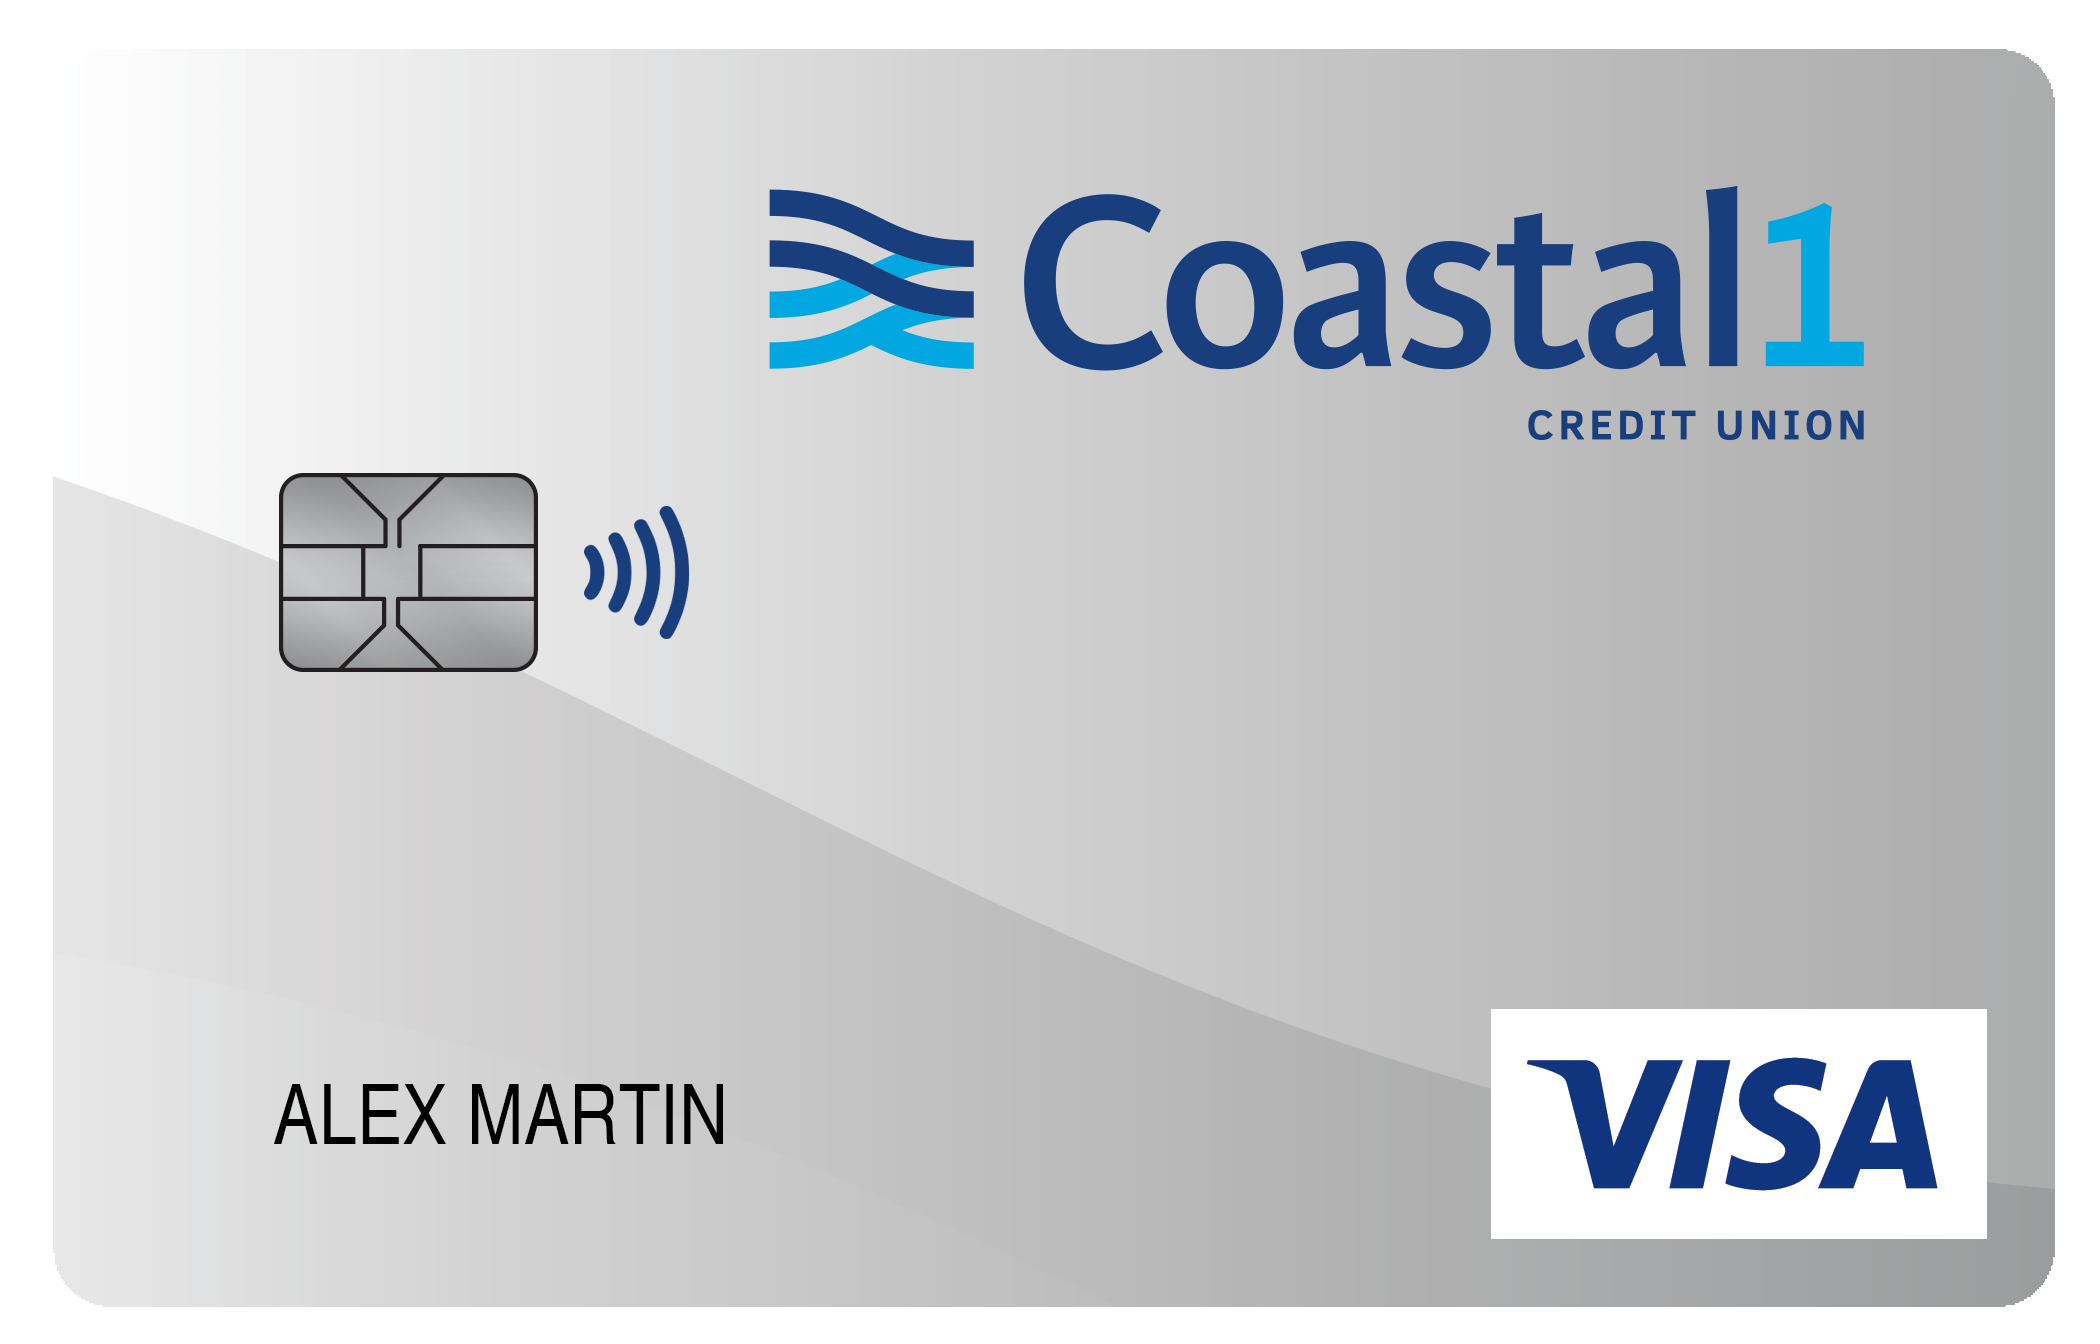 Coastal1 Platinum Visa